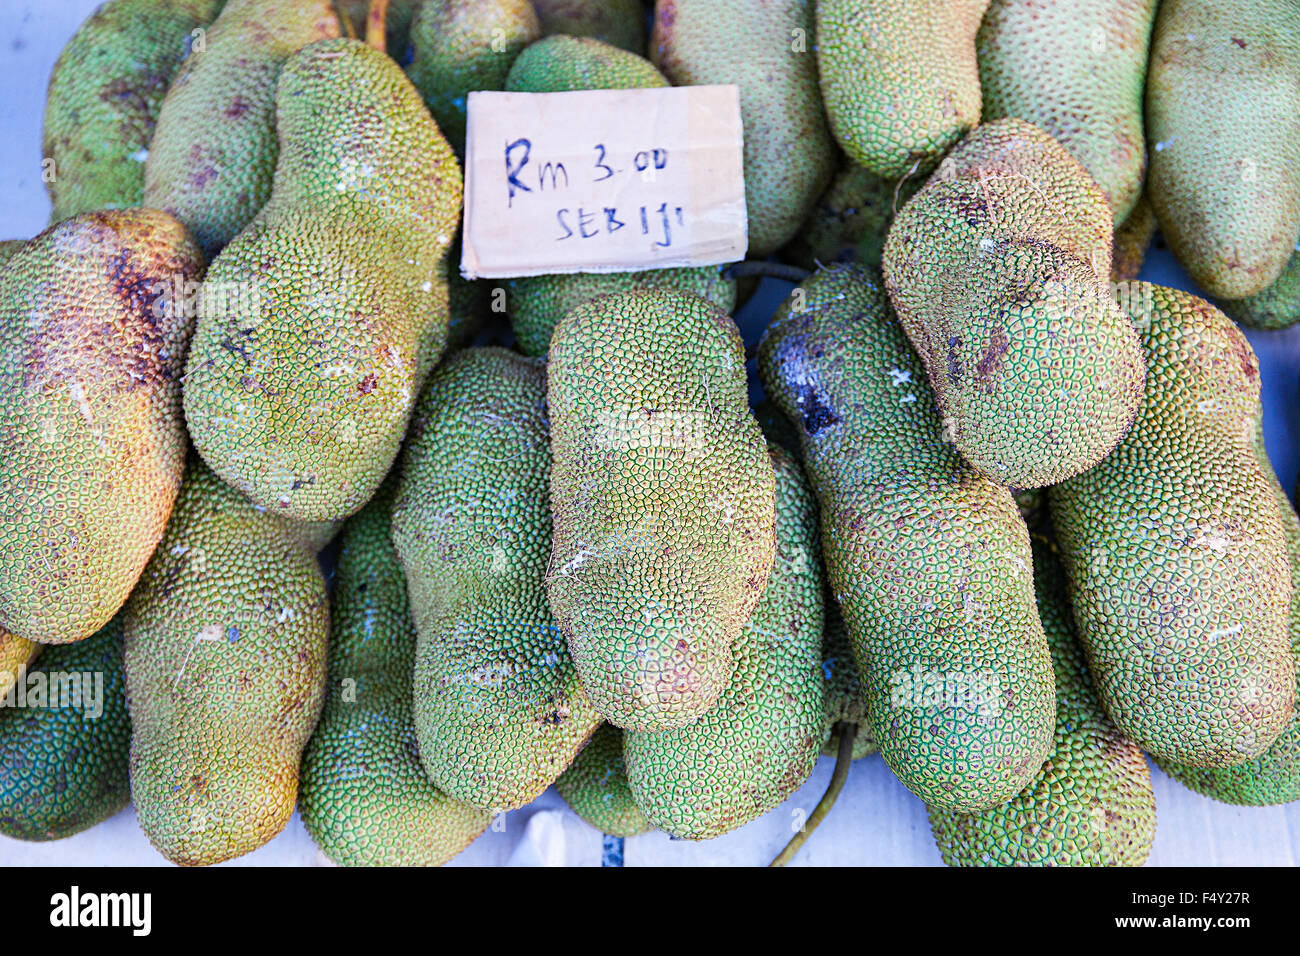 Cempedak or Artocarpus Integer, is a of family Moraceae, and same genus as breadfruit and jackfruit. Stock Photo